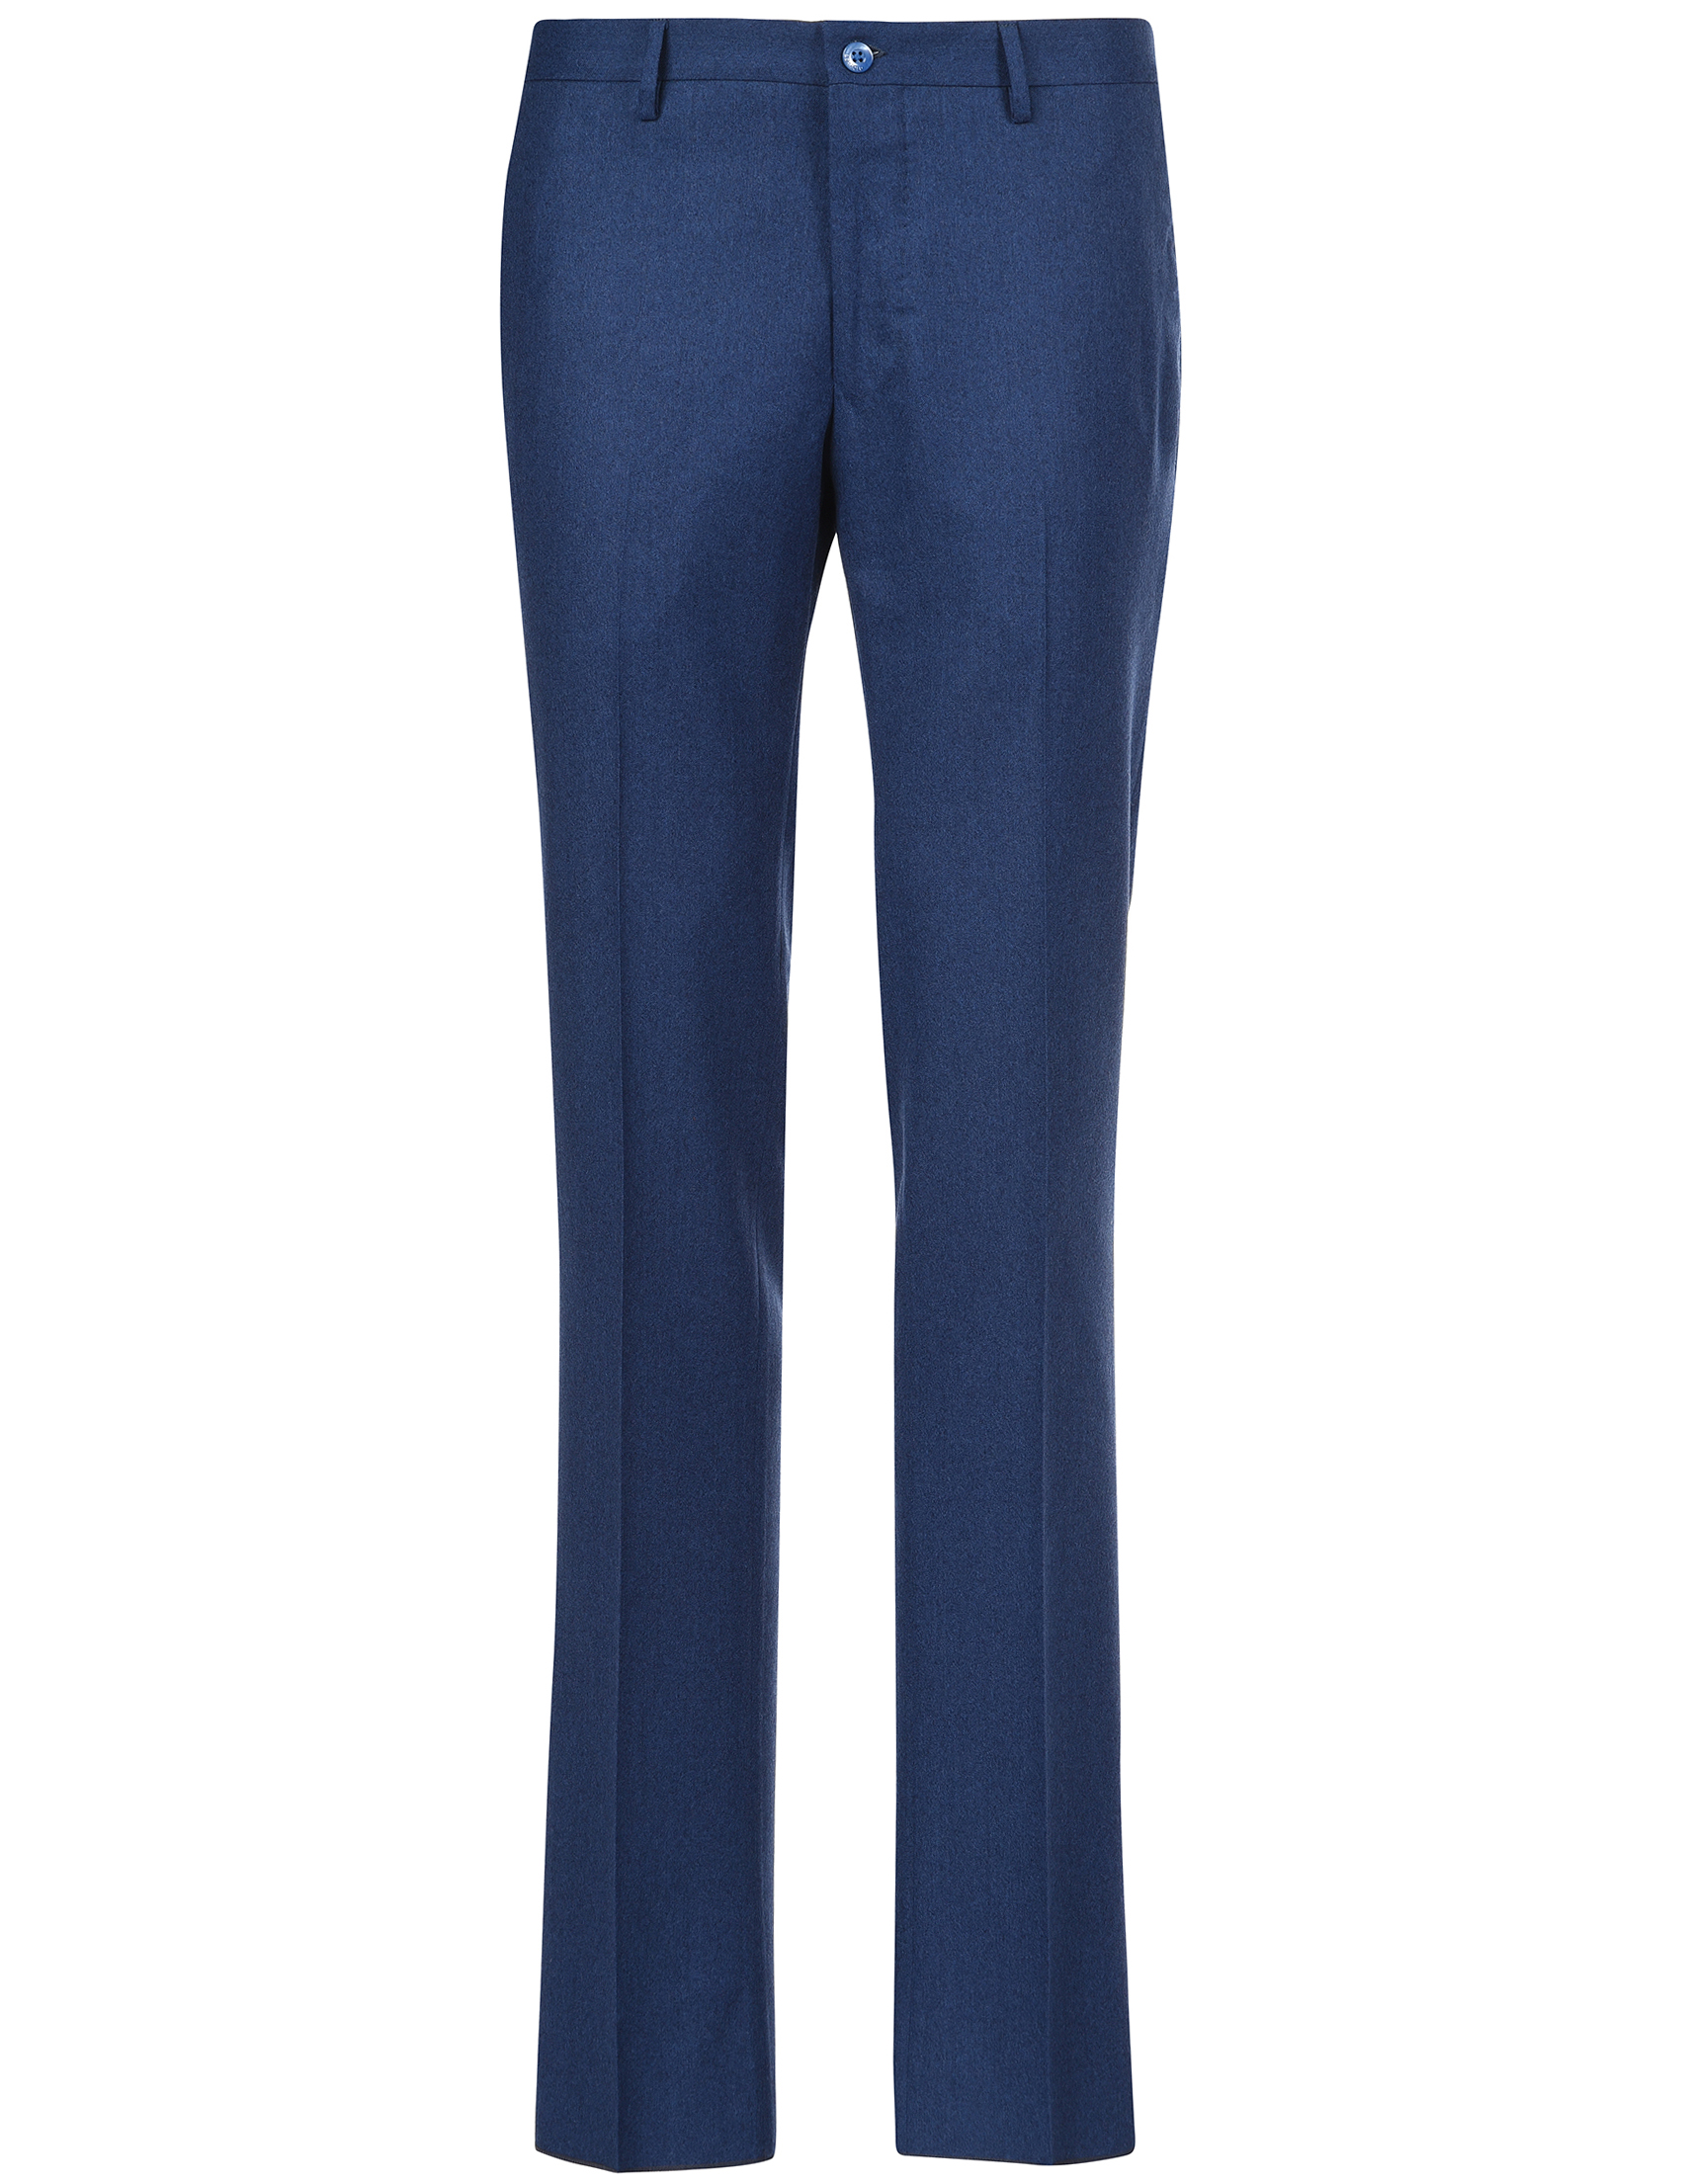 Мужские брюки BERTOLO 000045-1100_blue